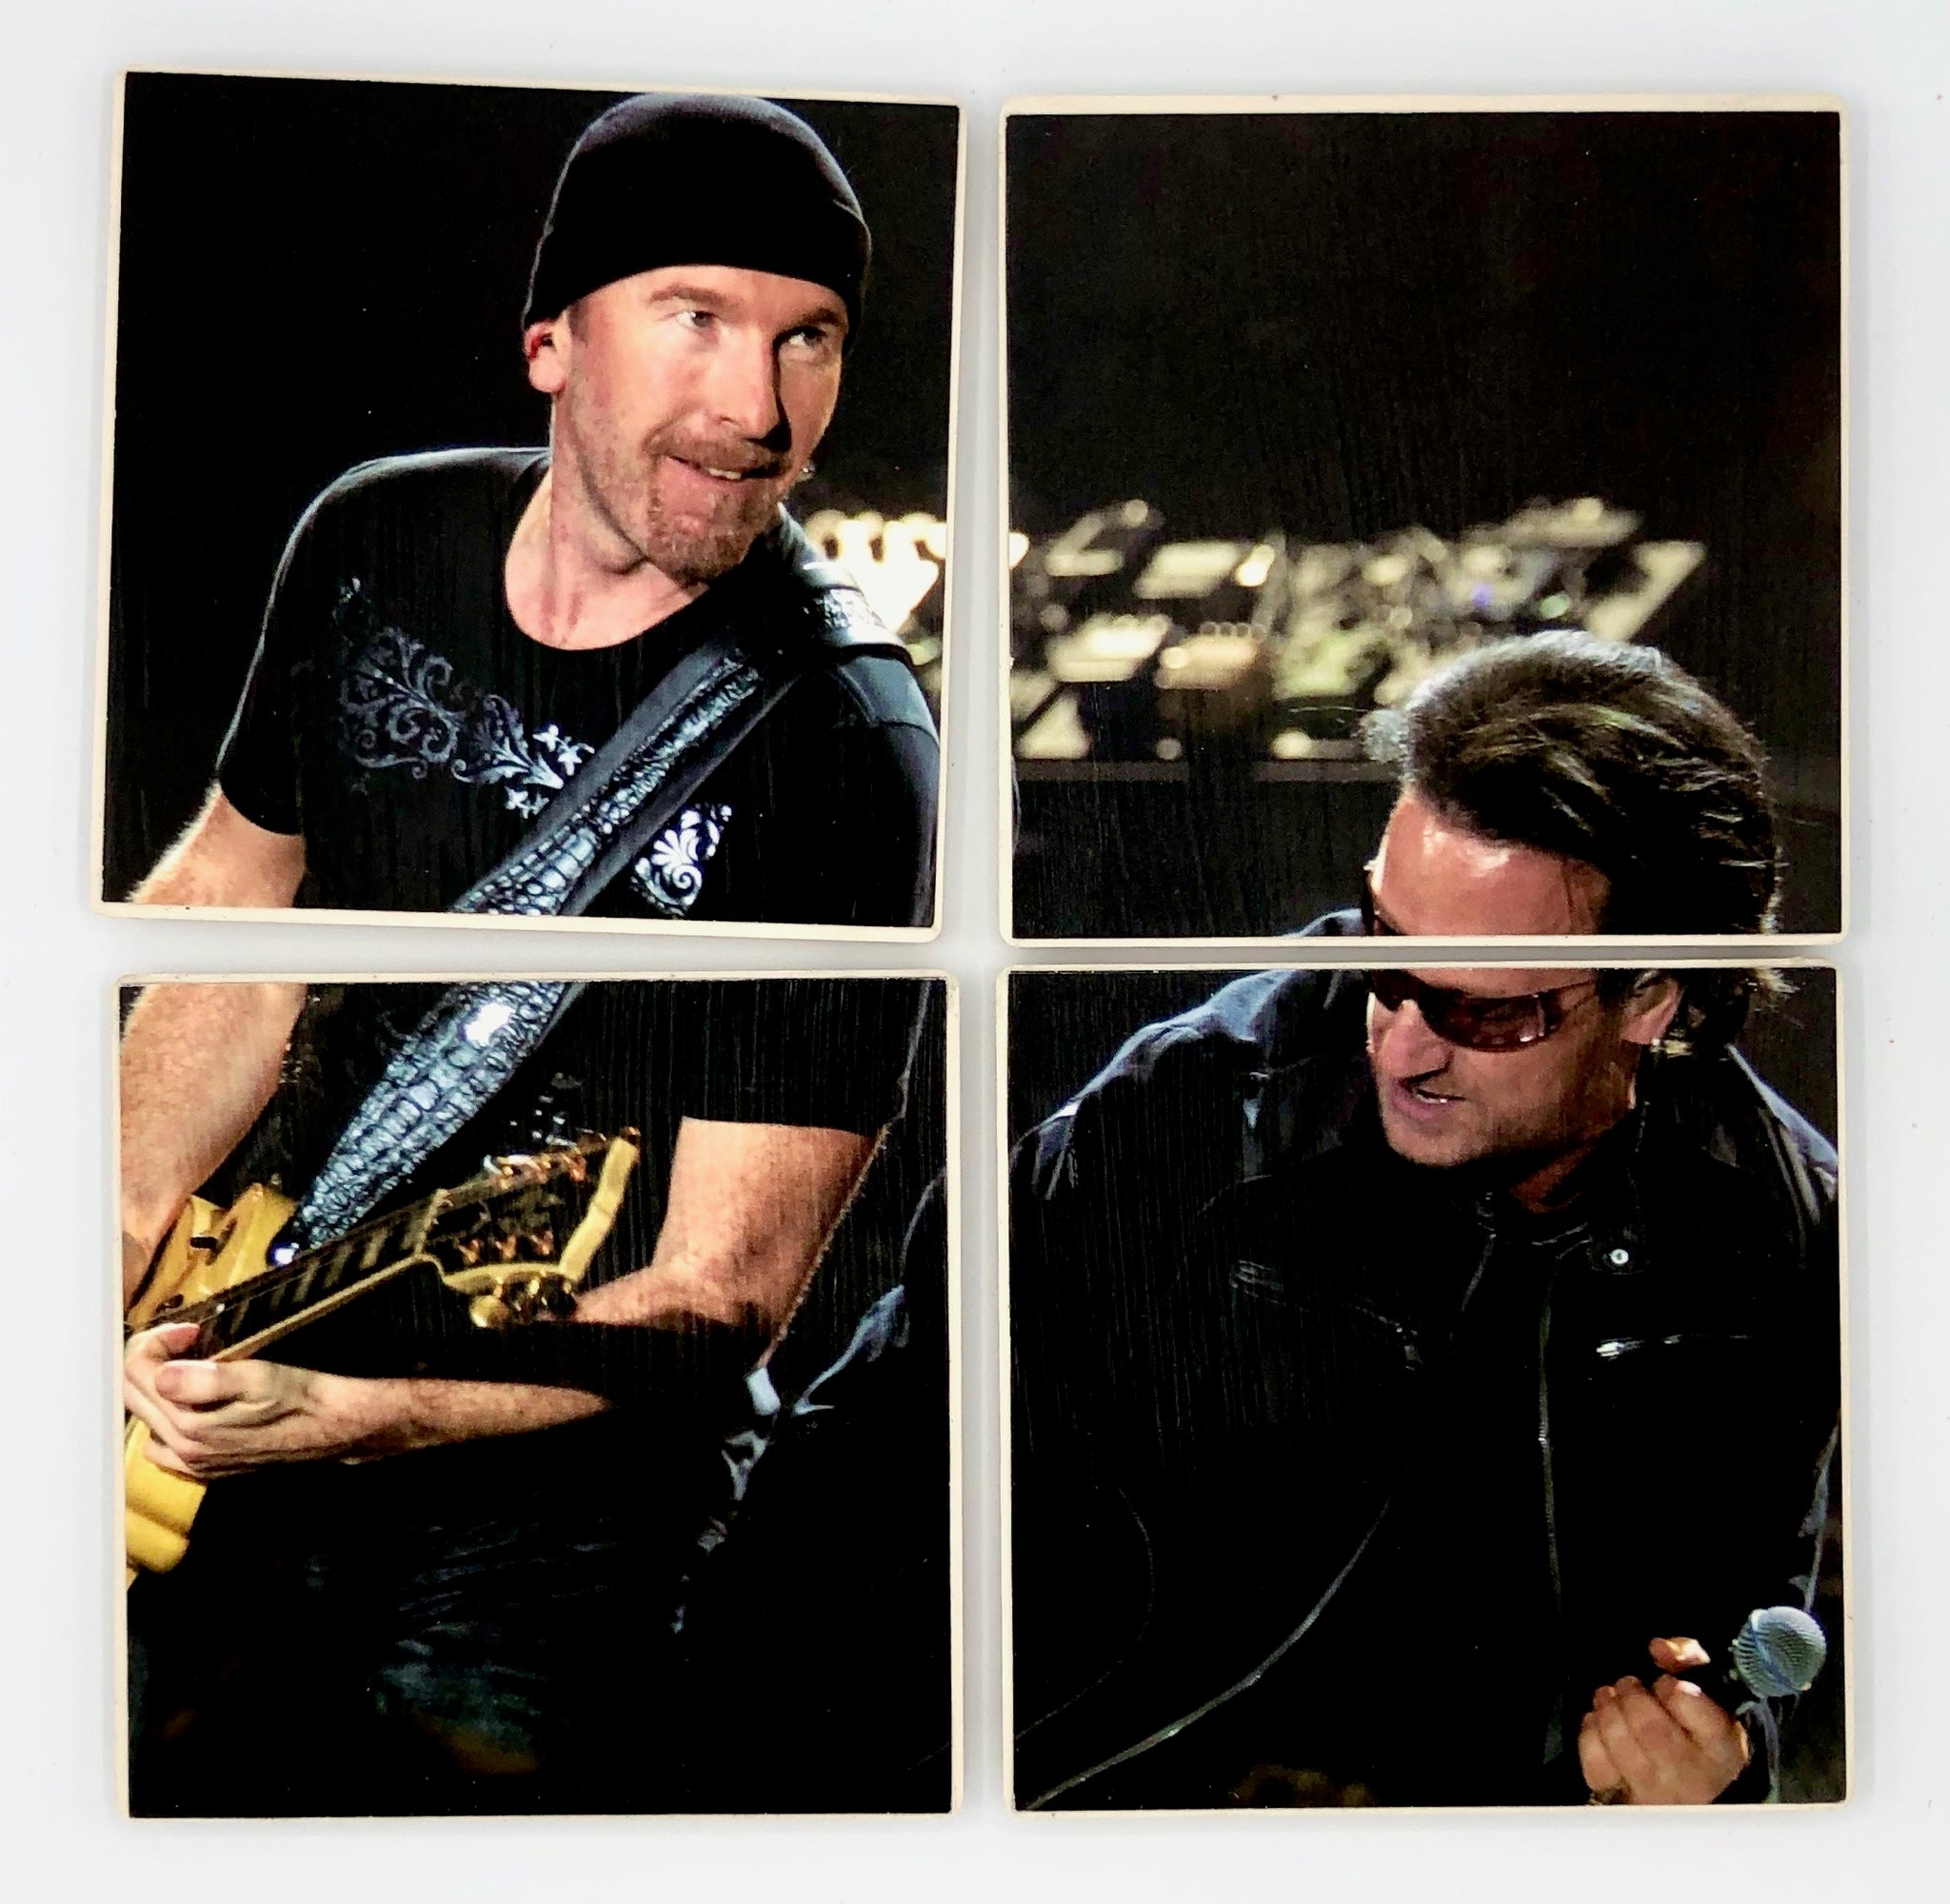 U2 - The Edge & Bono